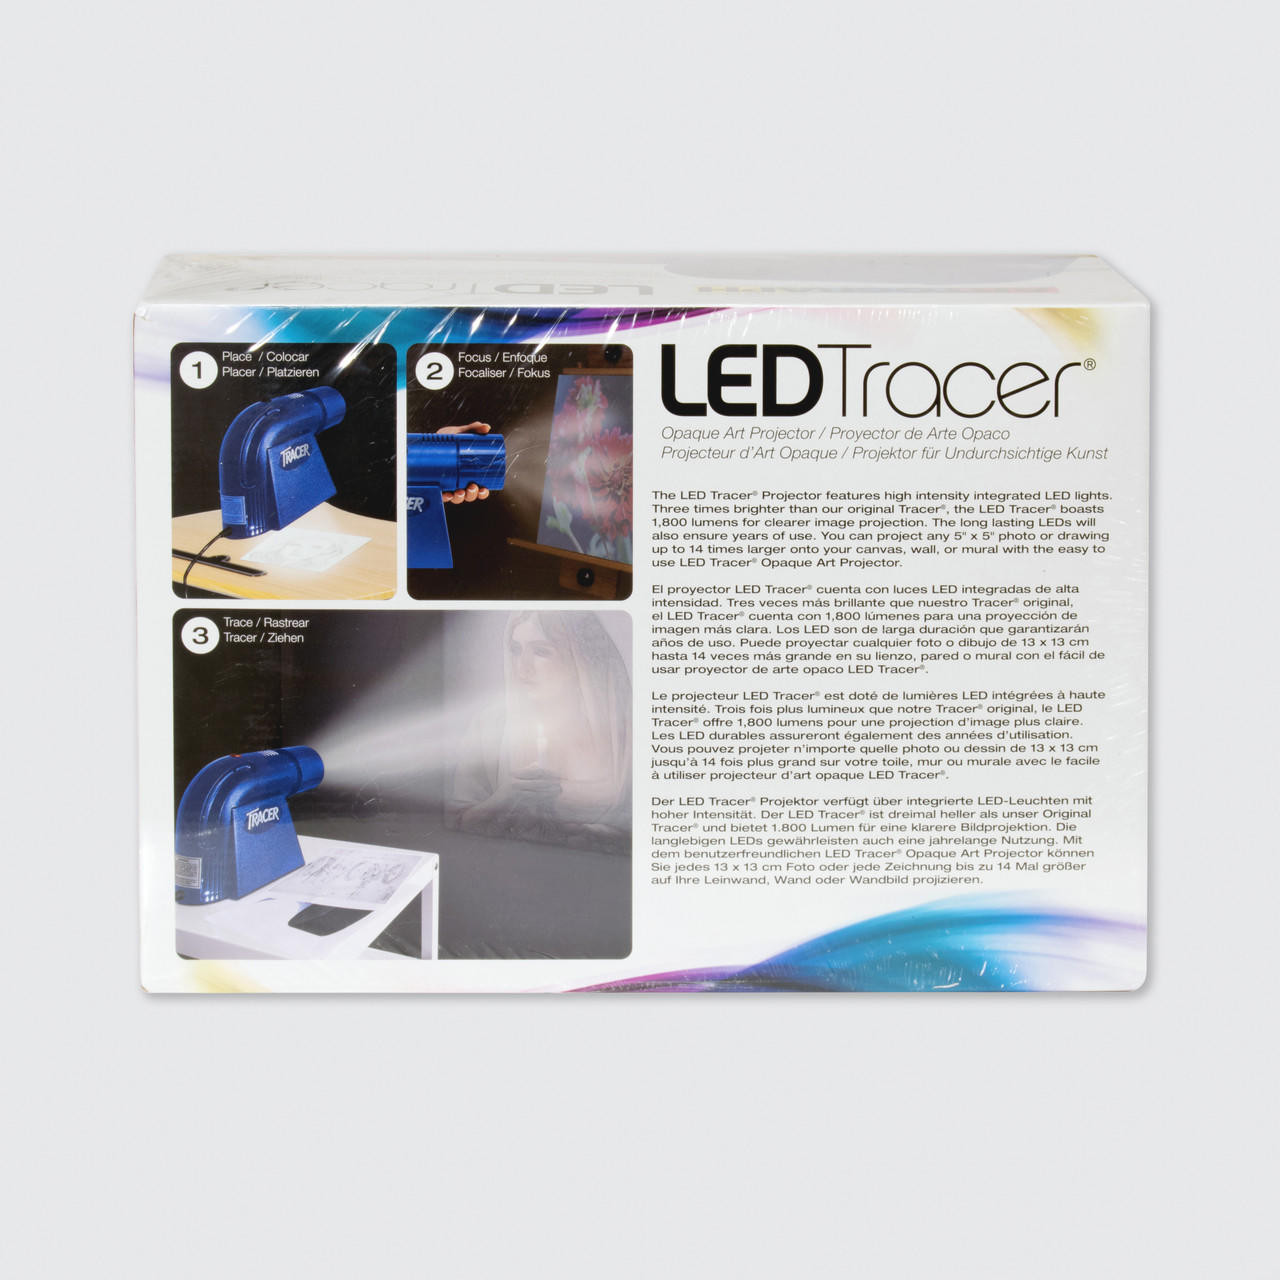 Artograph LED Tracer Opaque Art Projector